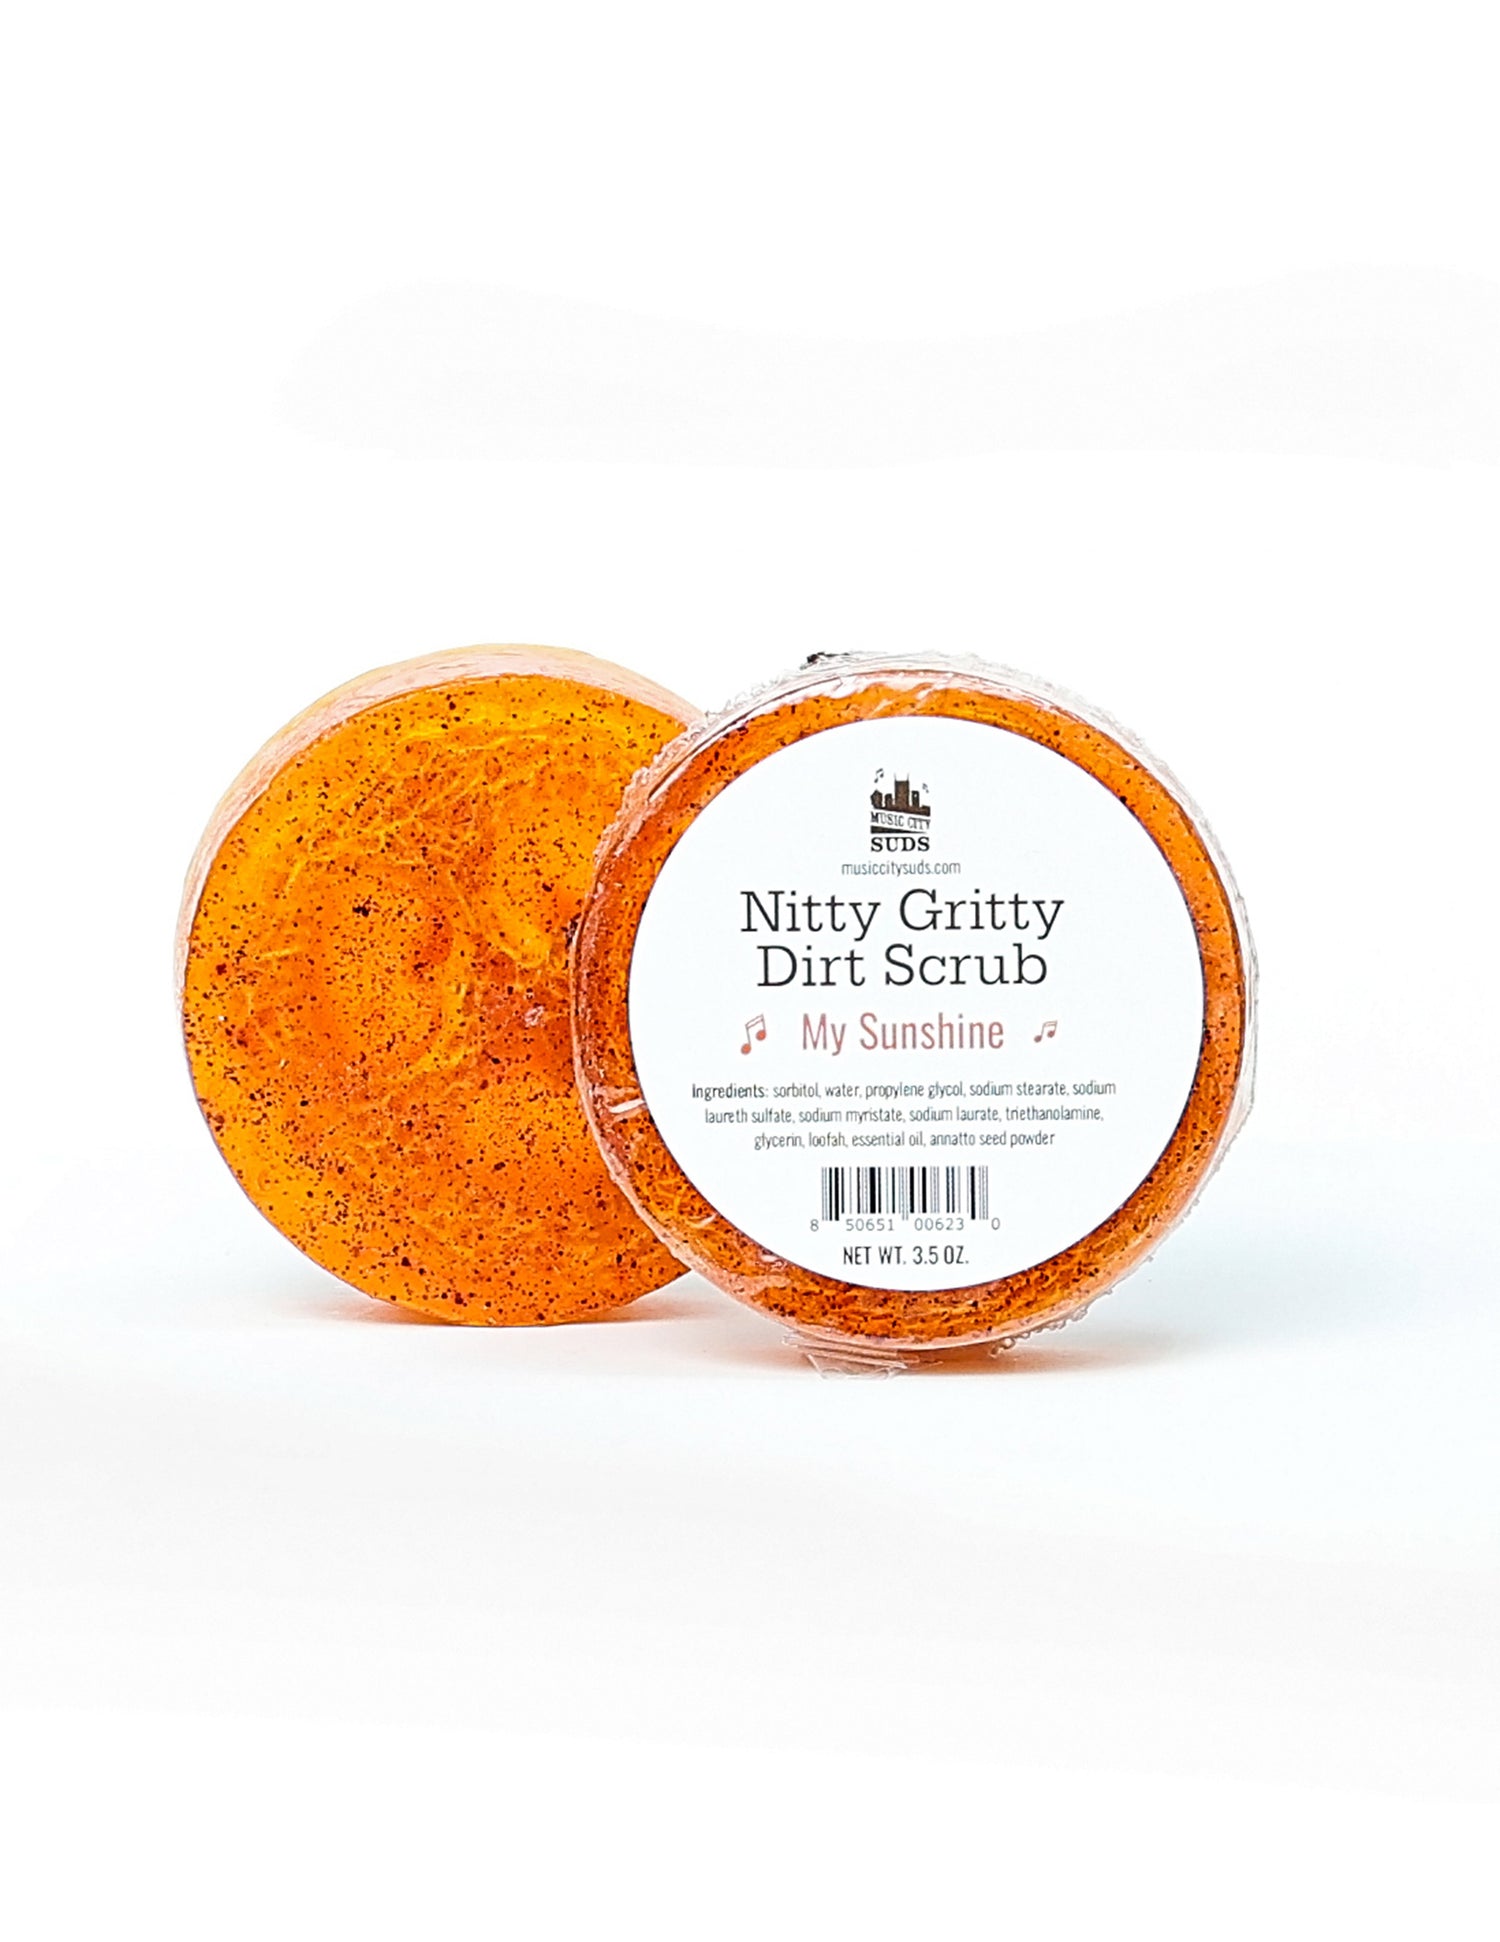 Nitty Gritty Dirty Scrub Bar - My Sunshine